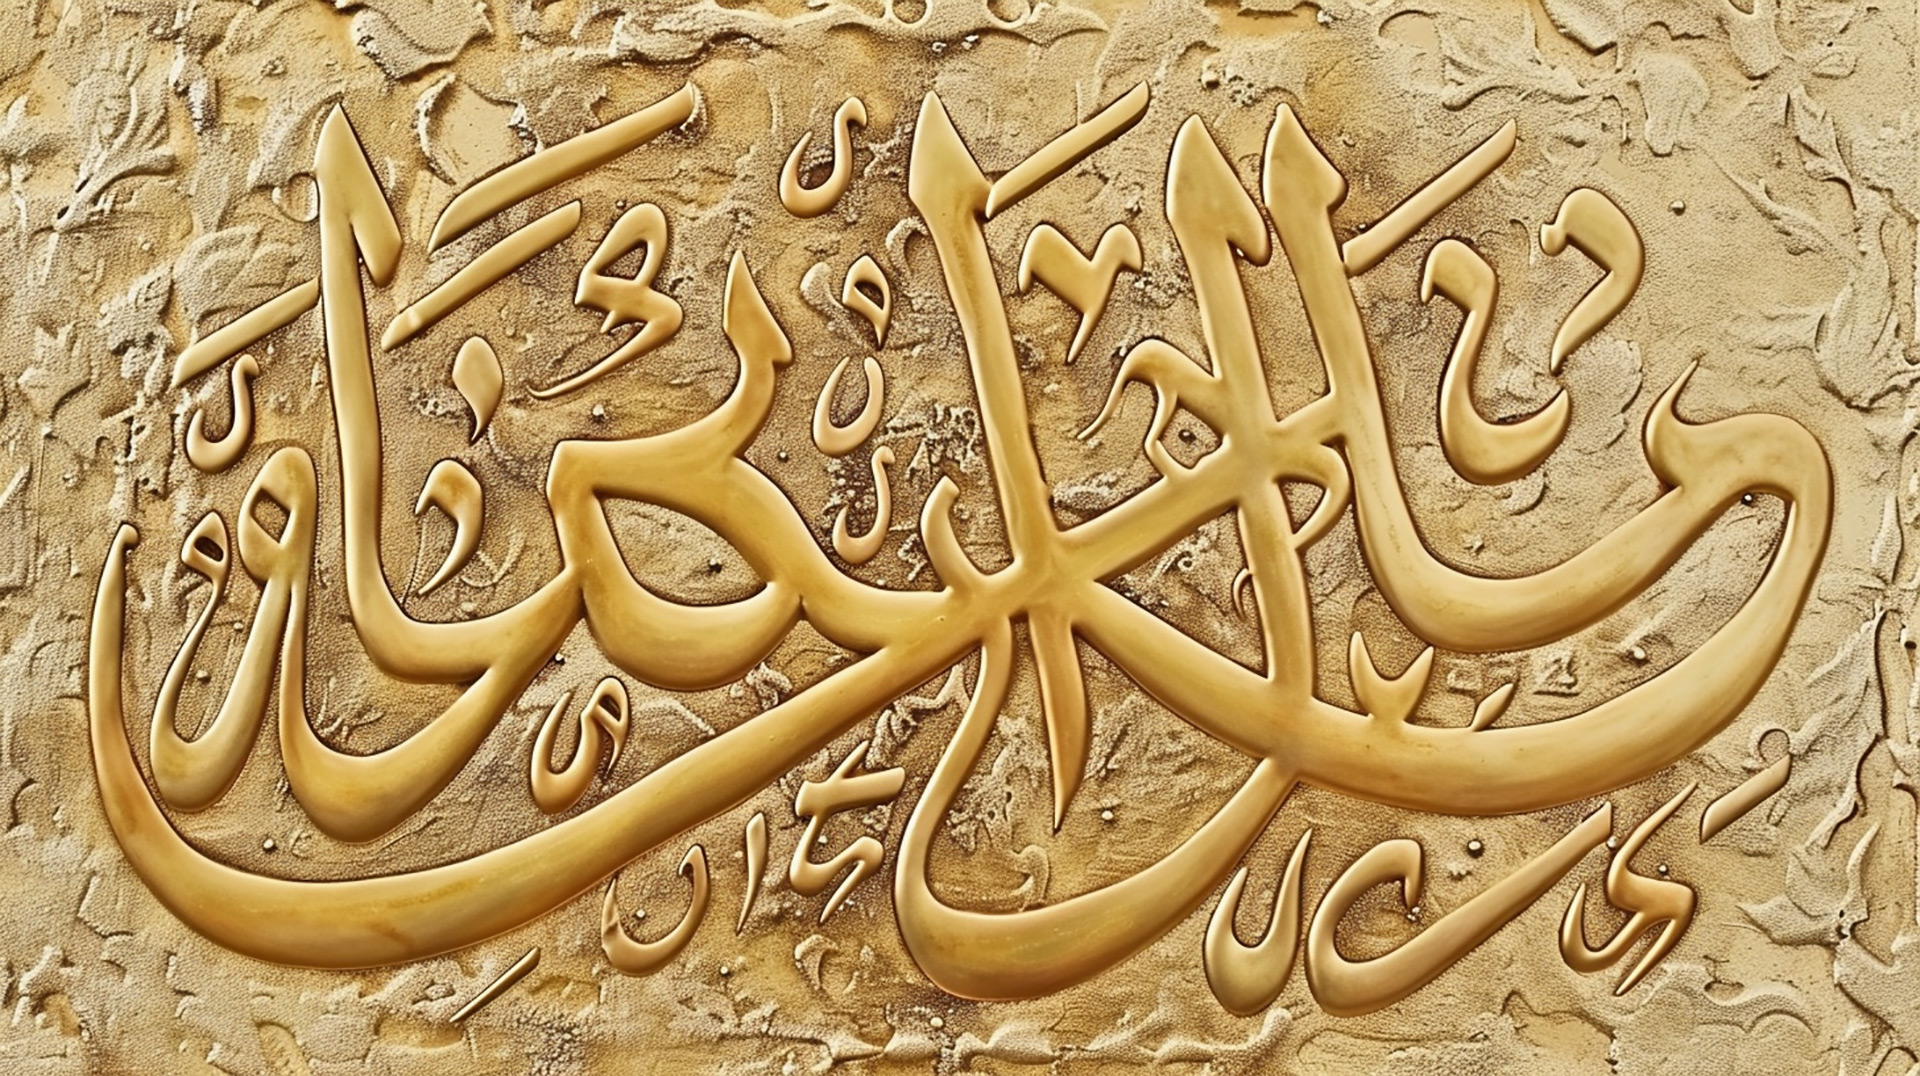 Islamic Tranquility: Muslim Religious HD Wallpaper